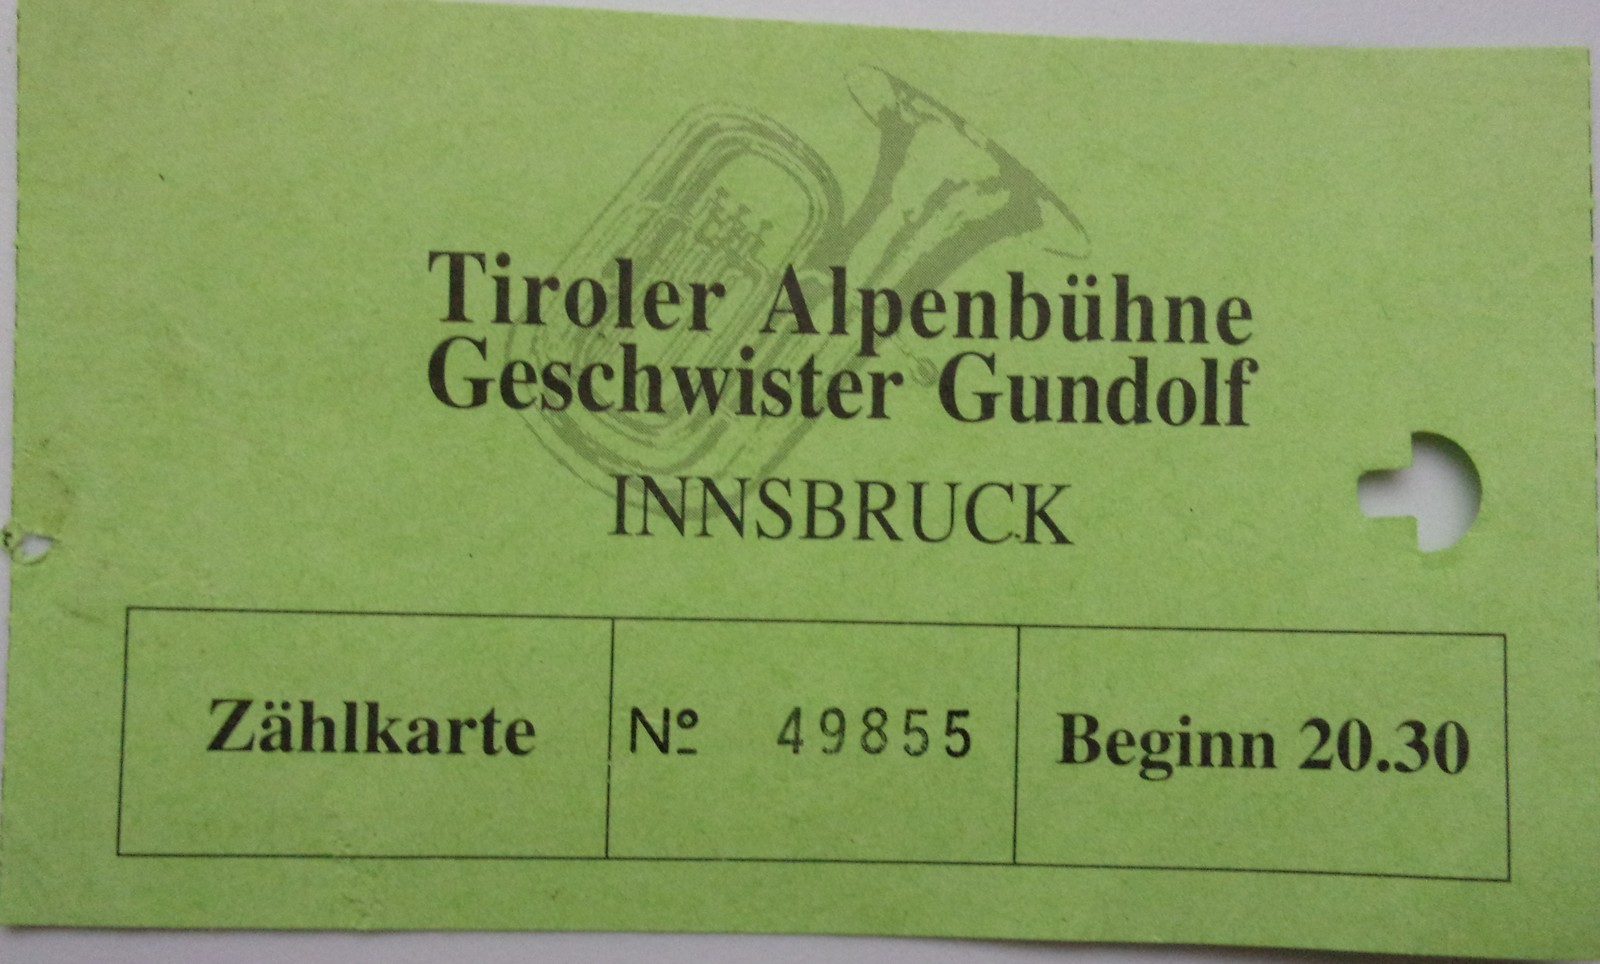 Primary image for Vintage Tiroler Alpenbuhne Geschwister Gundolf Innsbruck Used Ticket